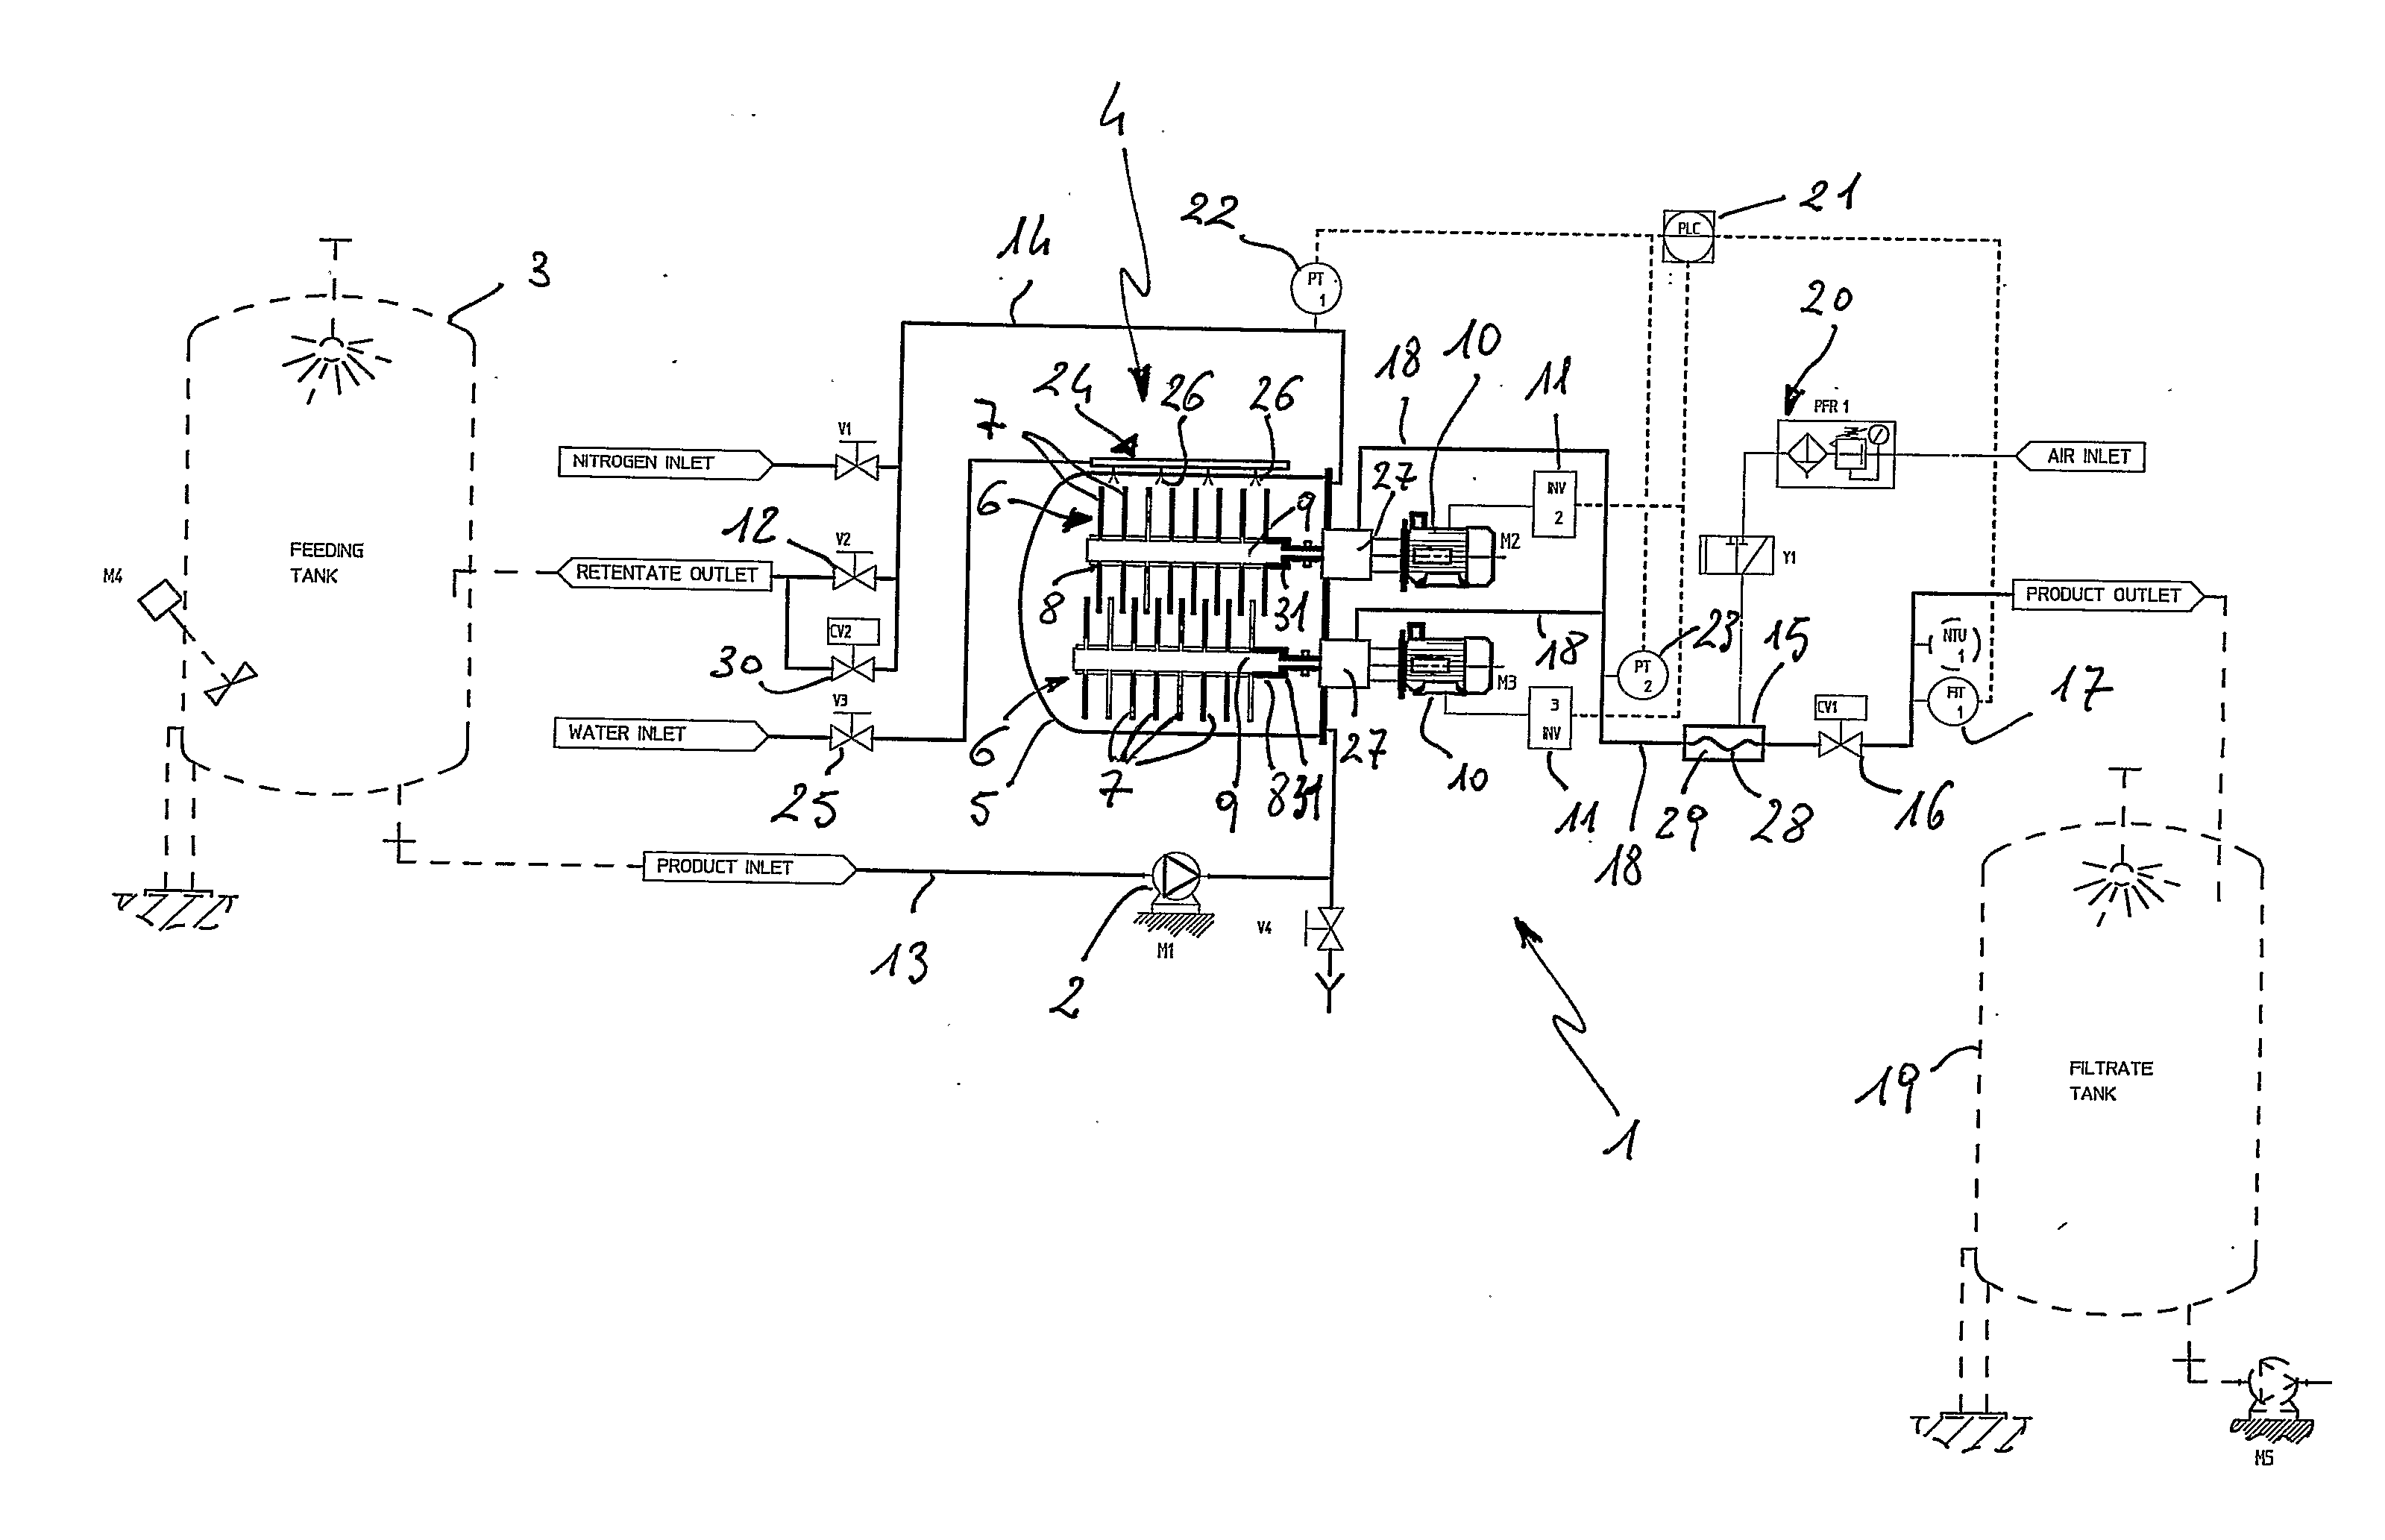 Apparatus and method for filtering liquids, particularly organic liquids